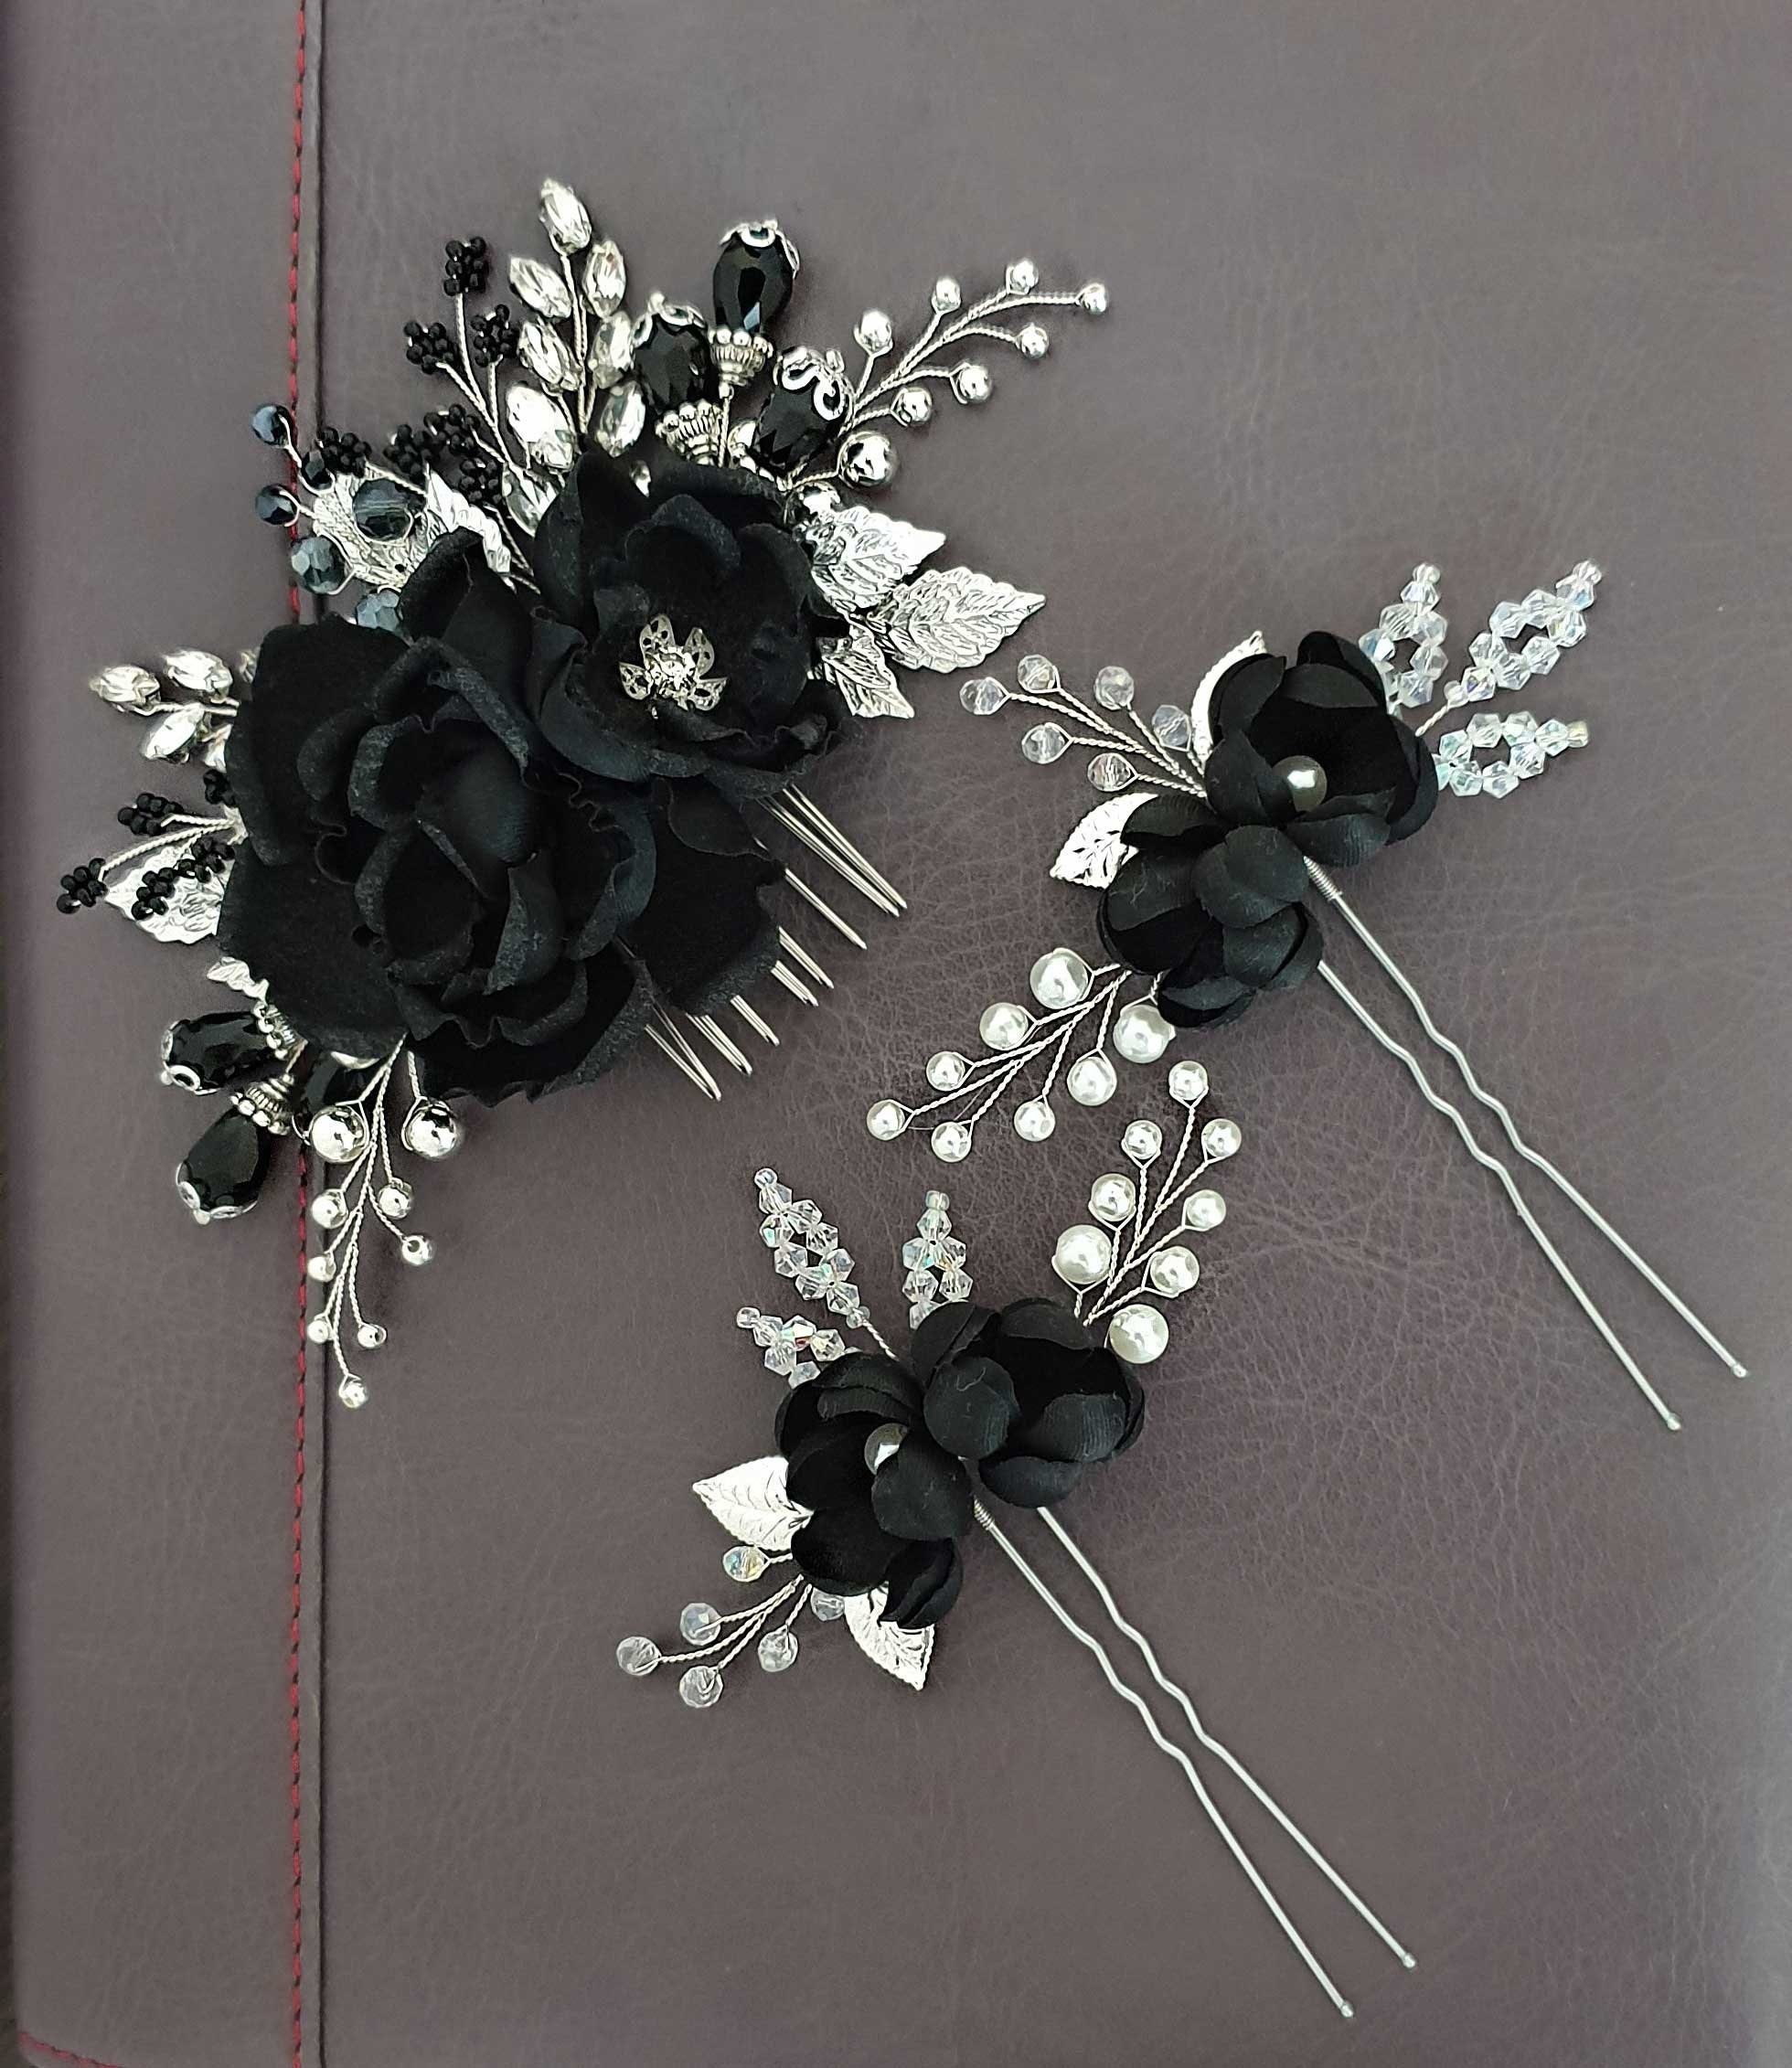 Black Applique Headdress Hair Accessories Flowers Wedding Dress